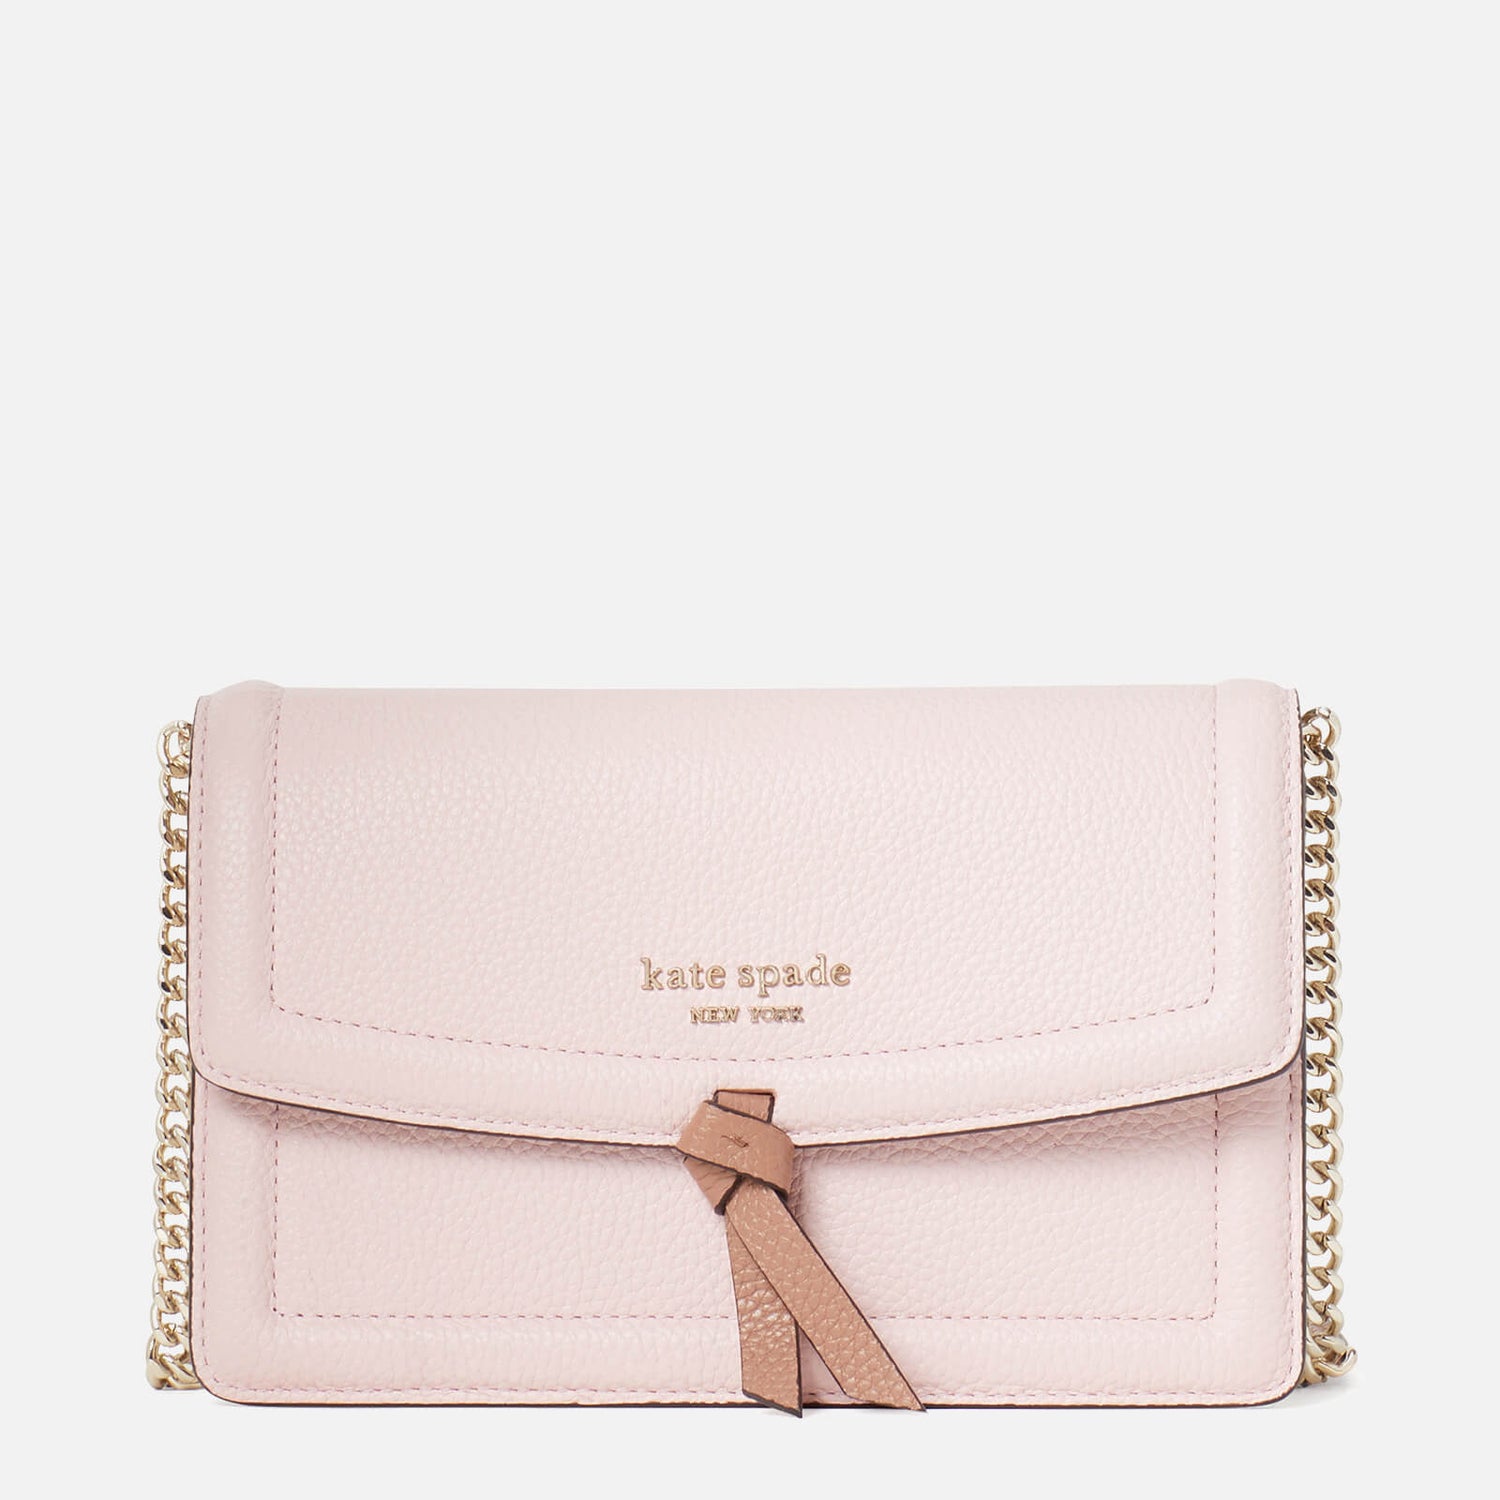 Kate Spade New York Women's Knott Flap Cross Body Bag - Chalk Pink ...